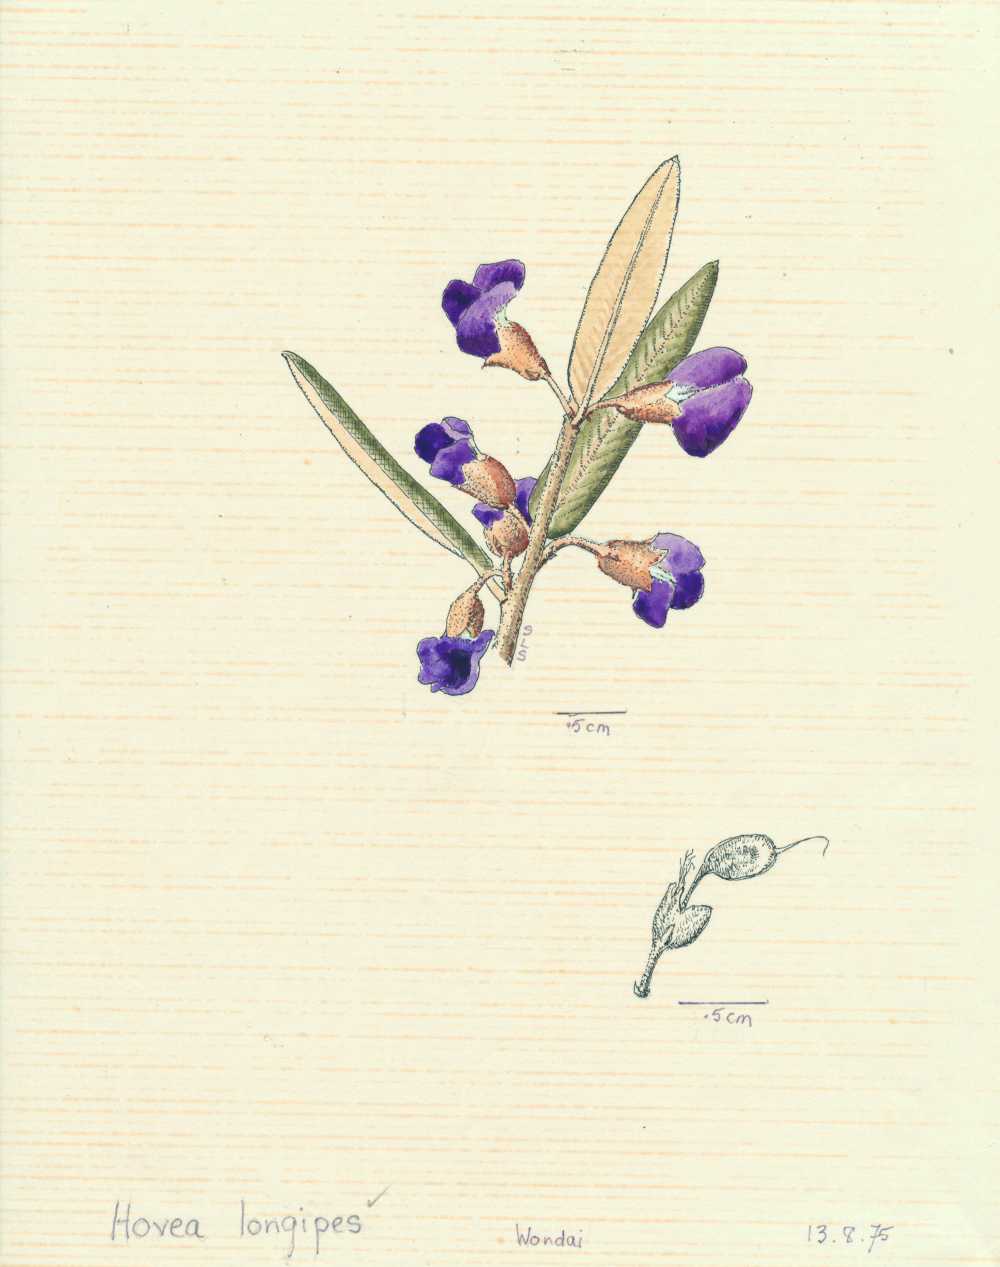 Hovea longipes | depiction by Sylvia Seiler, Killara, West Boondooma | Queensland Native Seeds